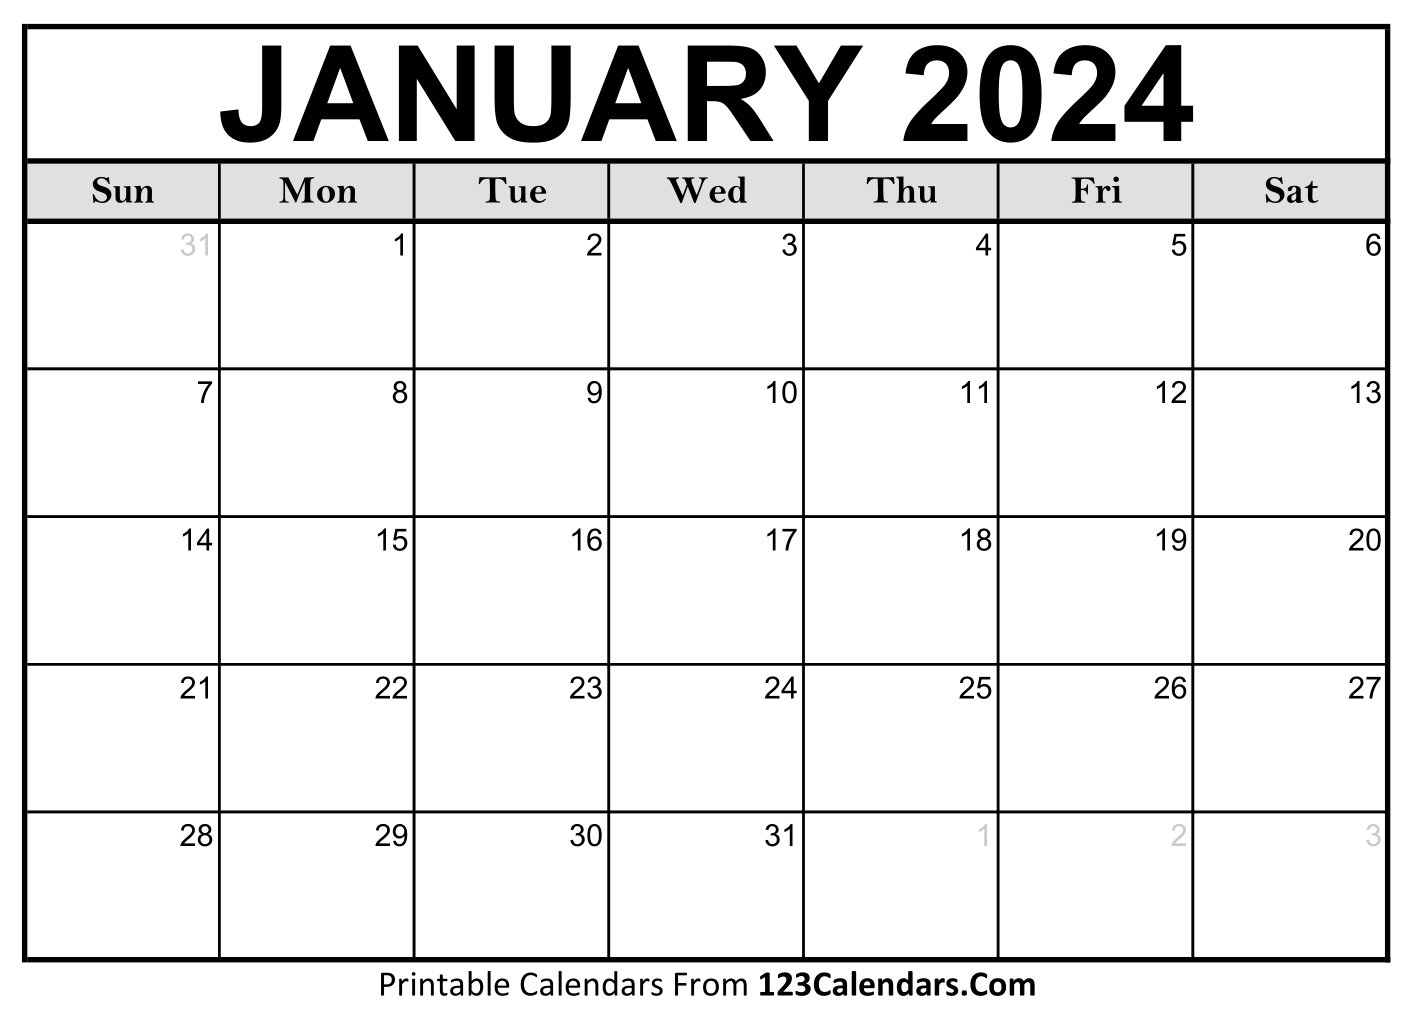 Printable January 2024 Calendar Templates - 123Calendars | Printable Calendar 2024 January